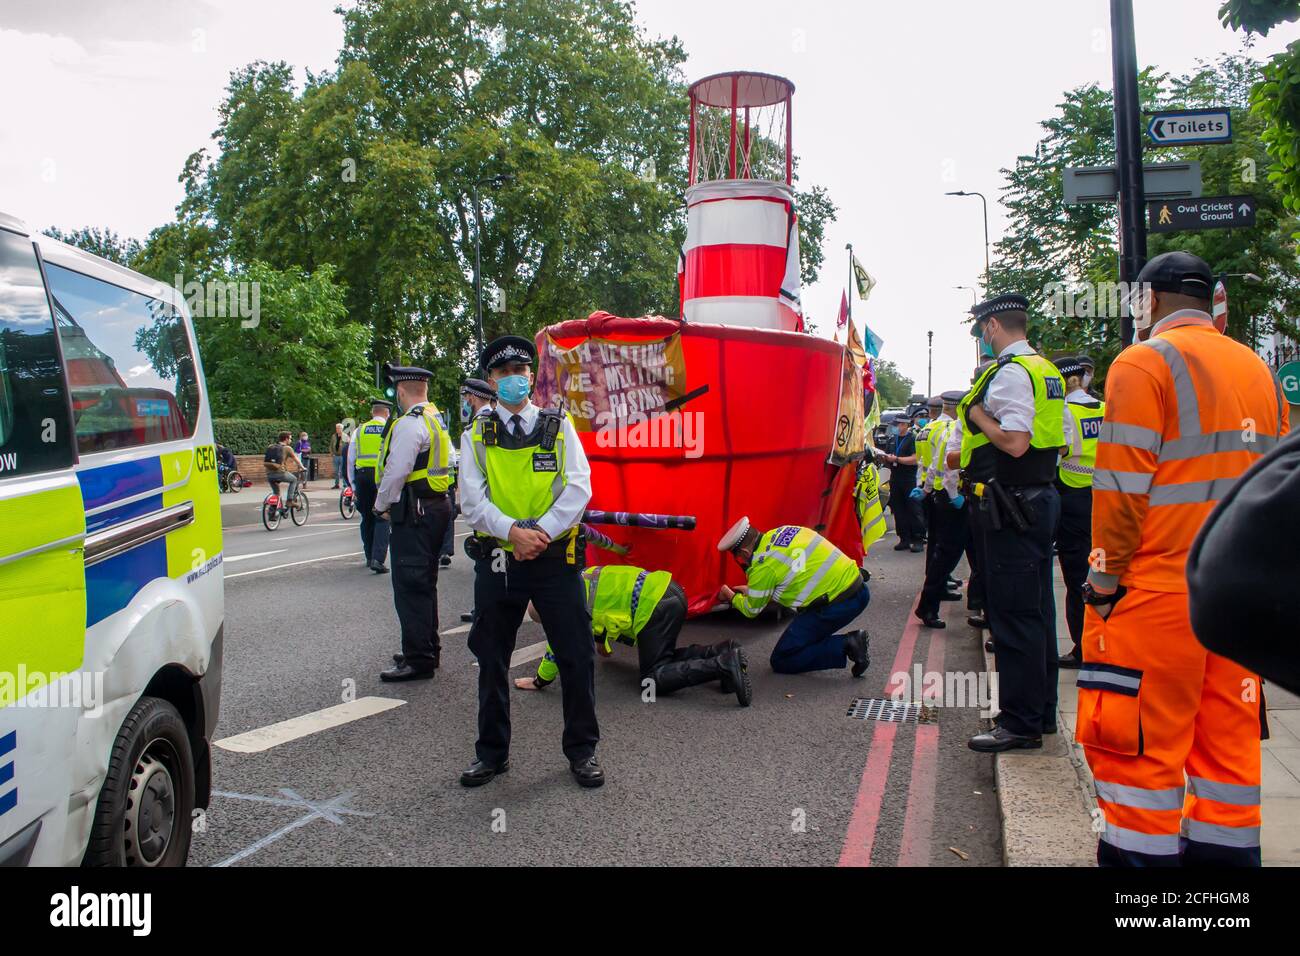 KENNINGTON, LONDON/ENGLAND - 5 September 2020: Man, woman and dog watching Extinction Rebellion's “Lightship Greta” boat being dismantled by police Stock Photo